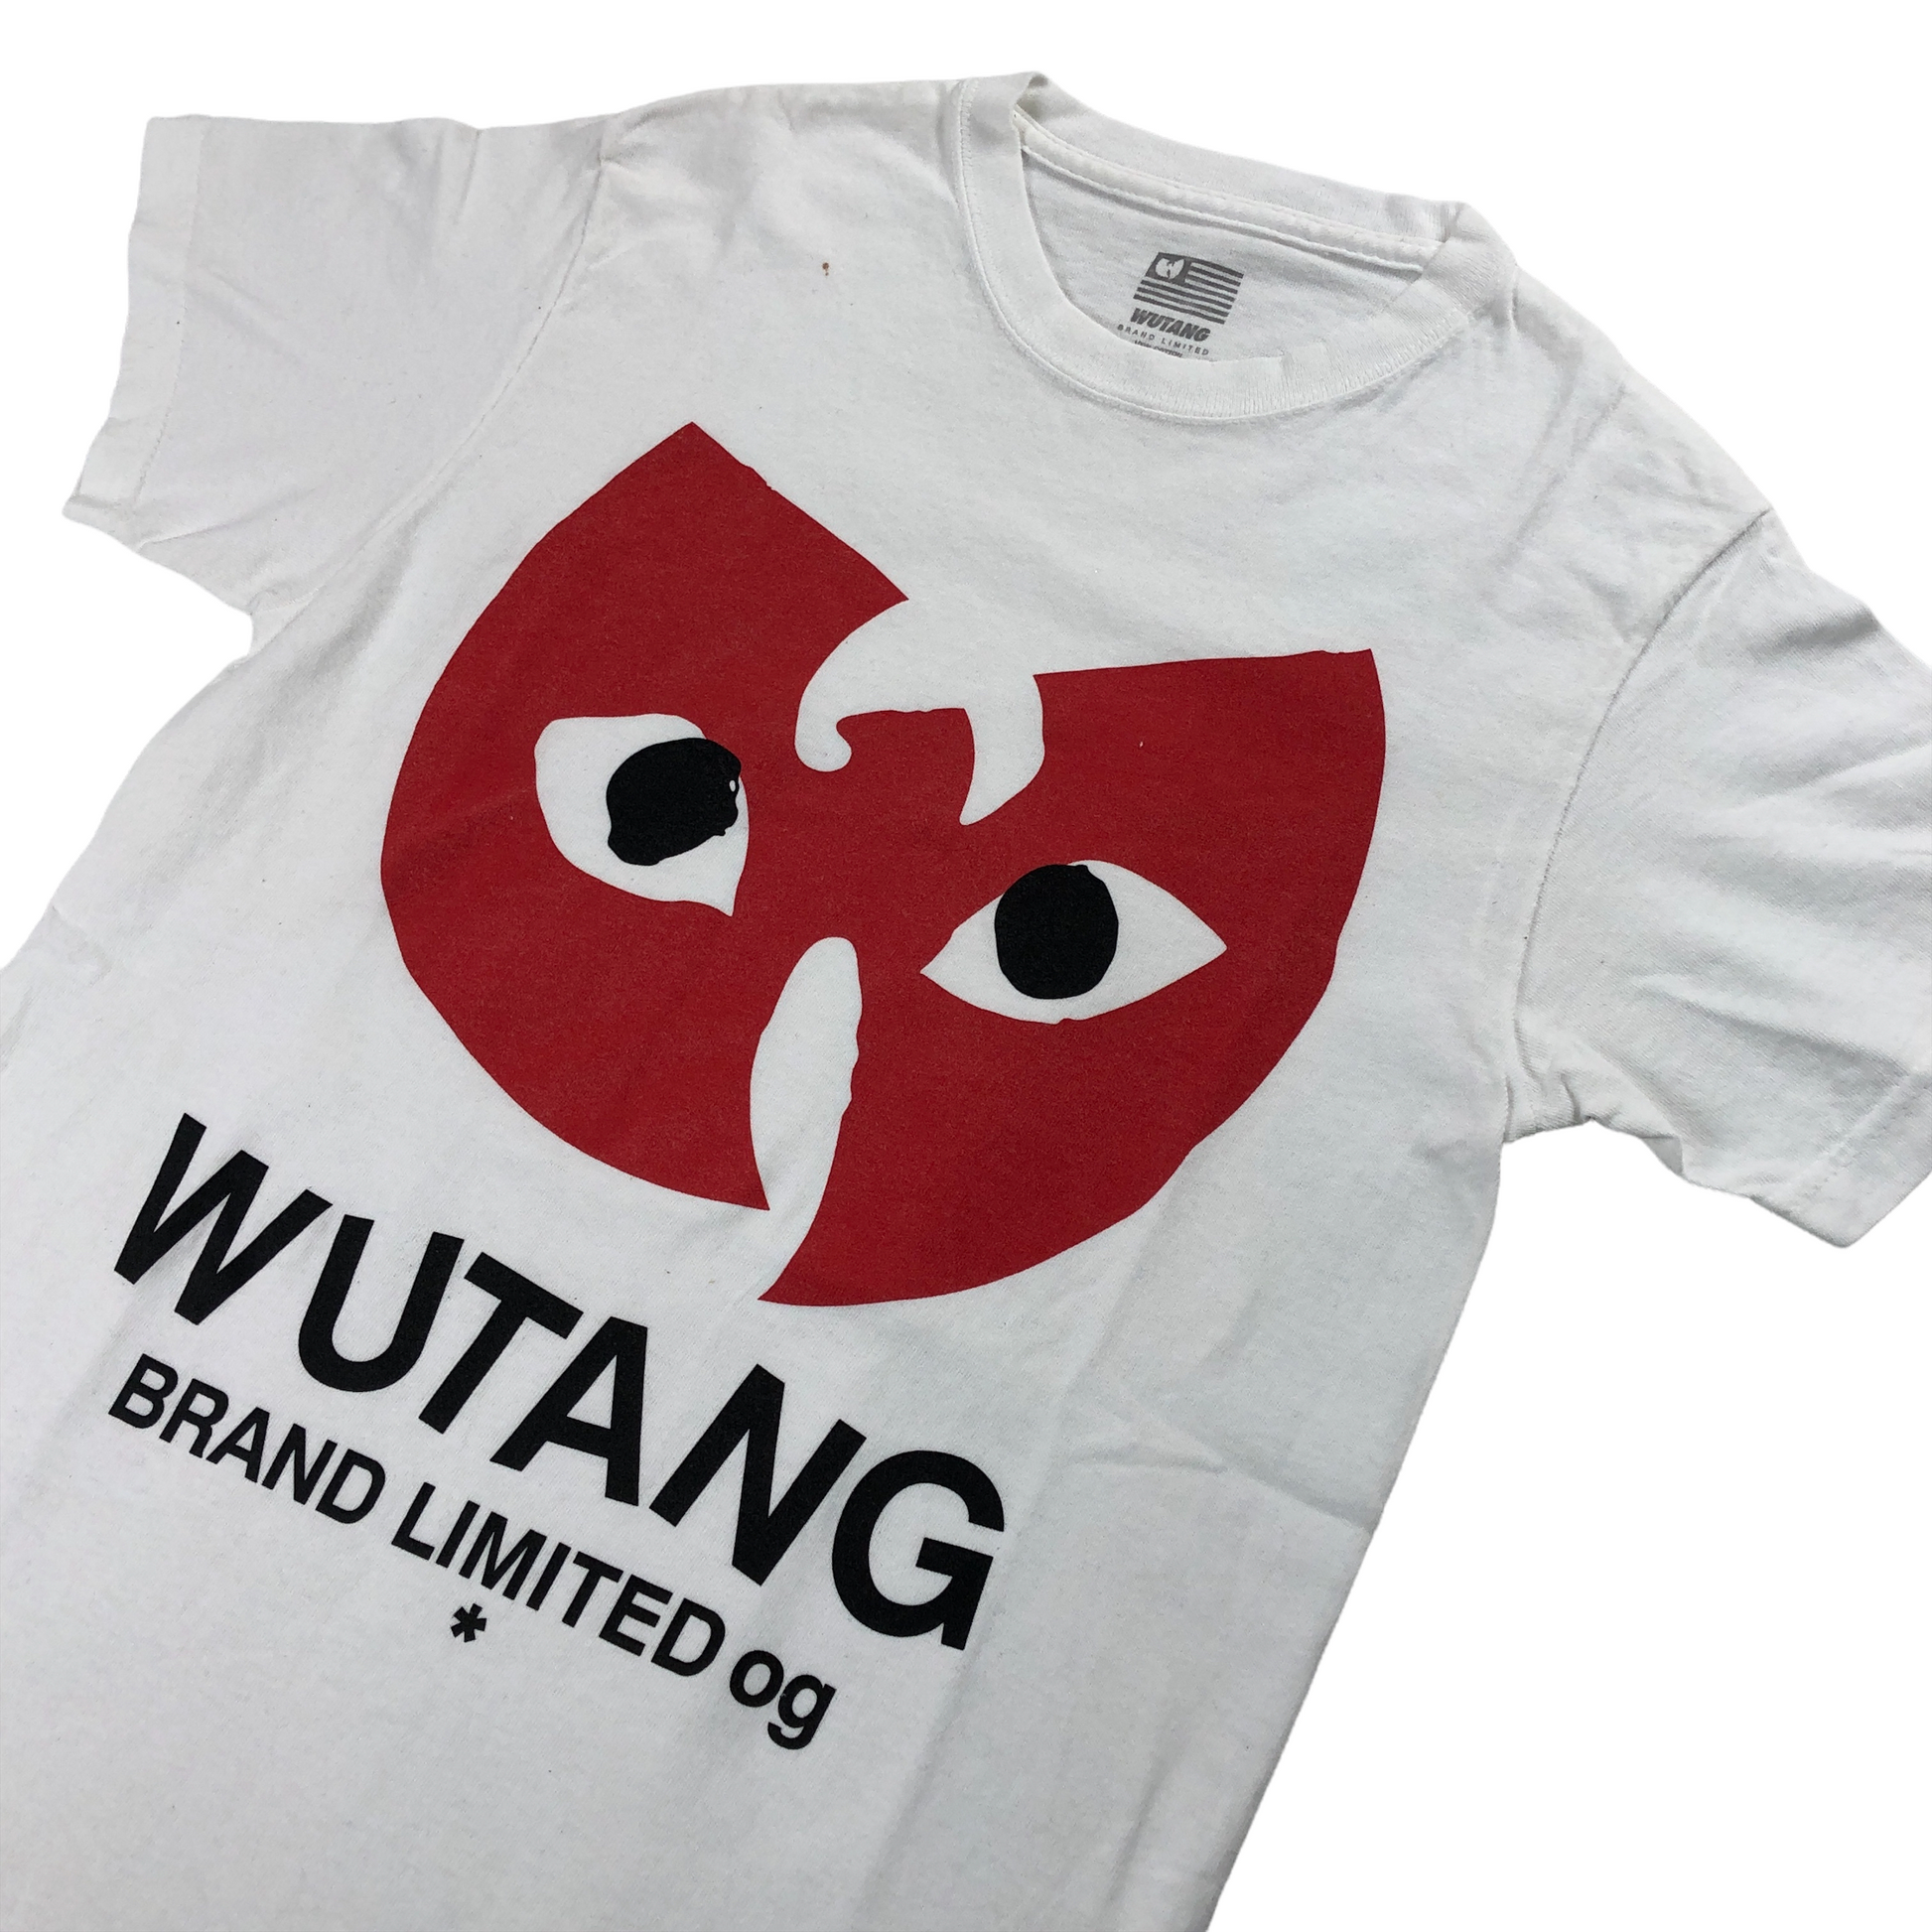 WU-tang Clan ウータン・クラン Tシャツ 半袖 カットソー ビッグロゴ